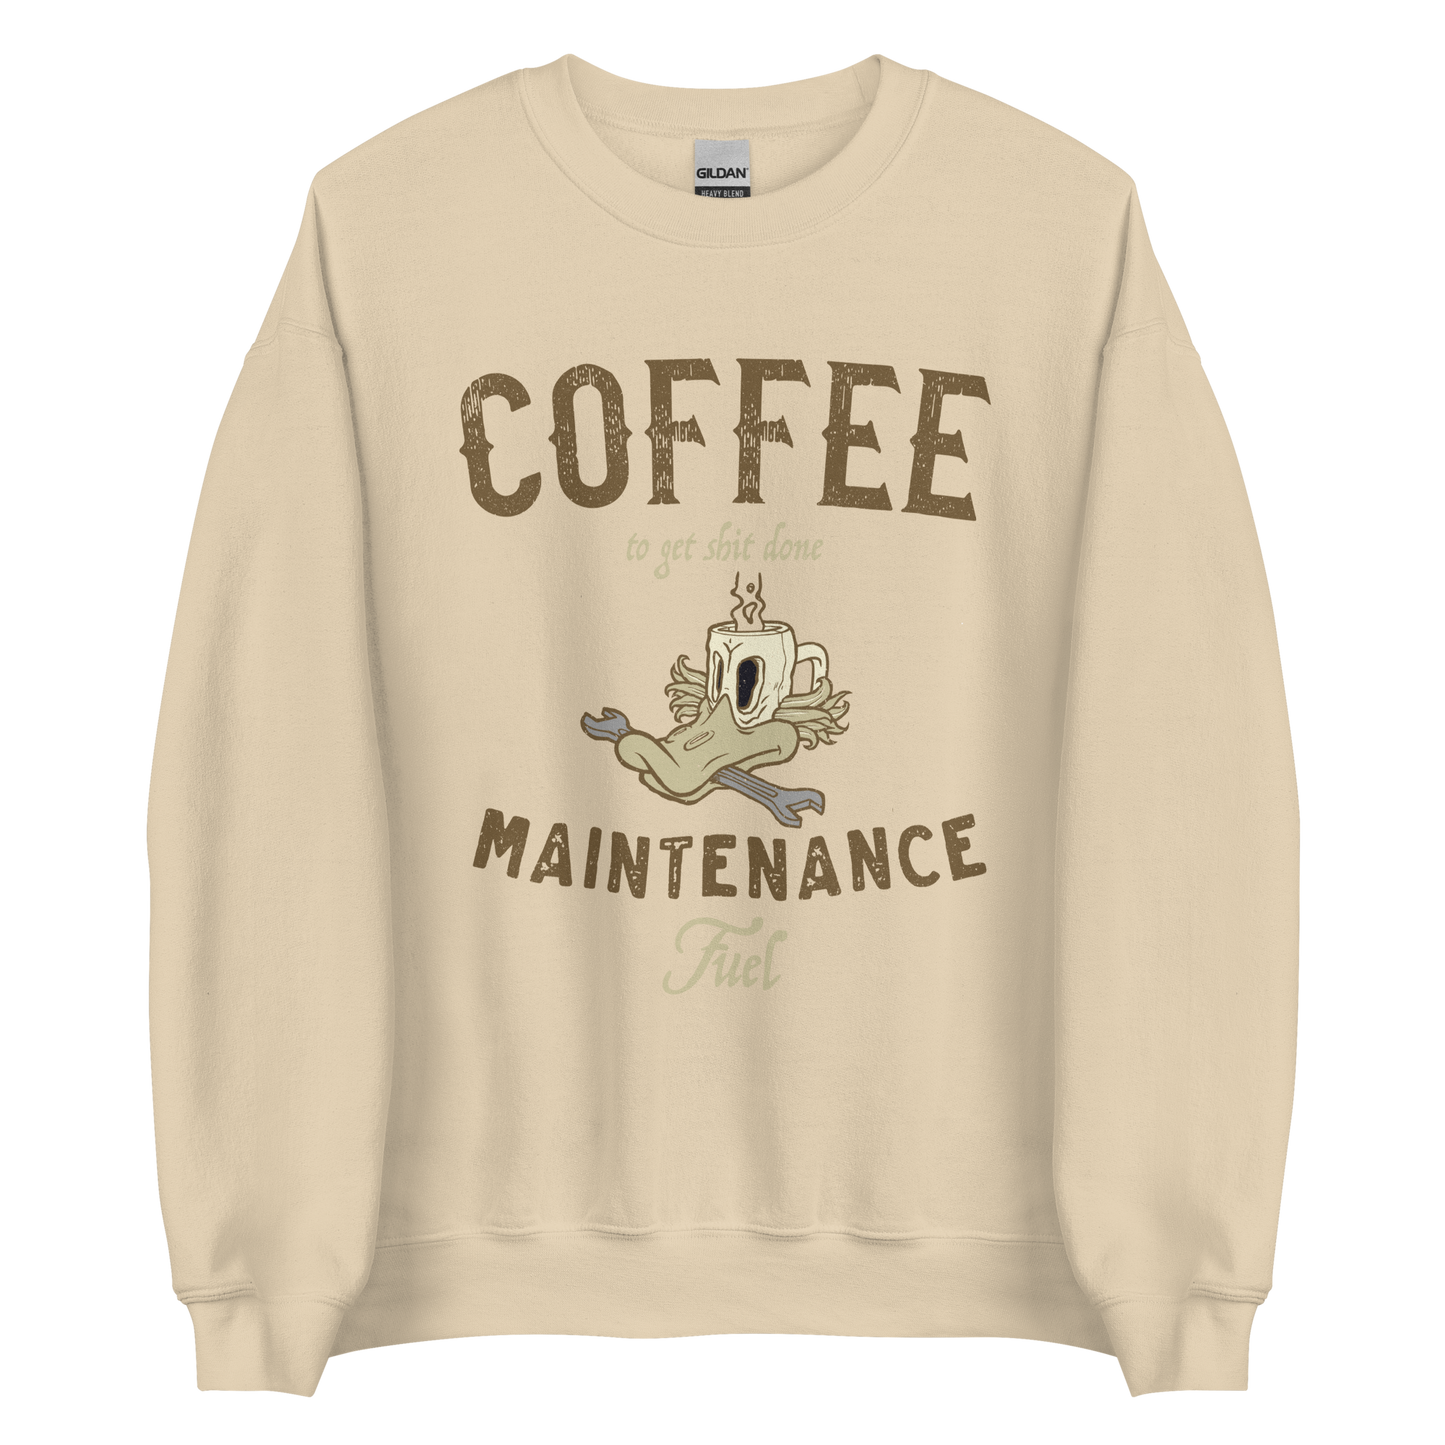 Coffee Maintenance Fuel Motorbike Sweatshirt